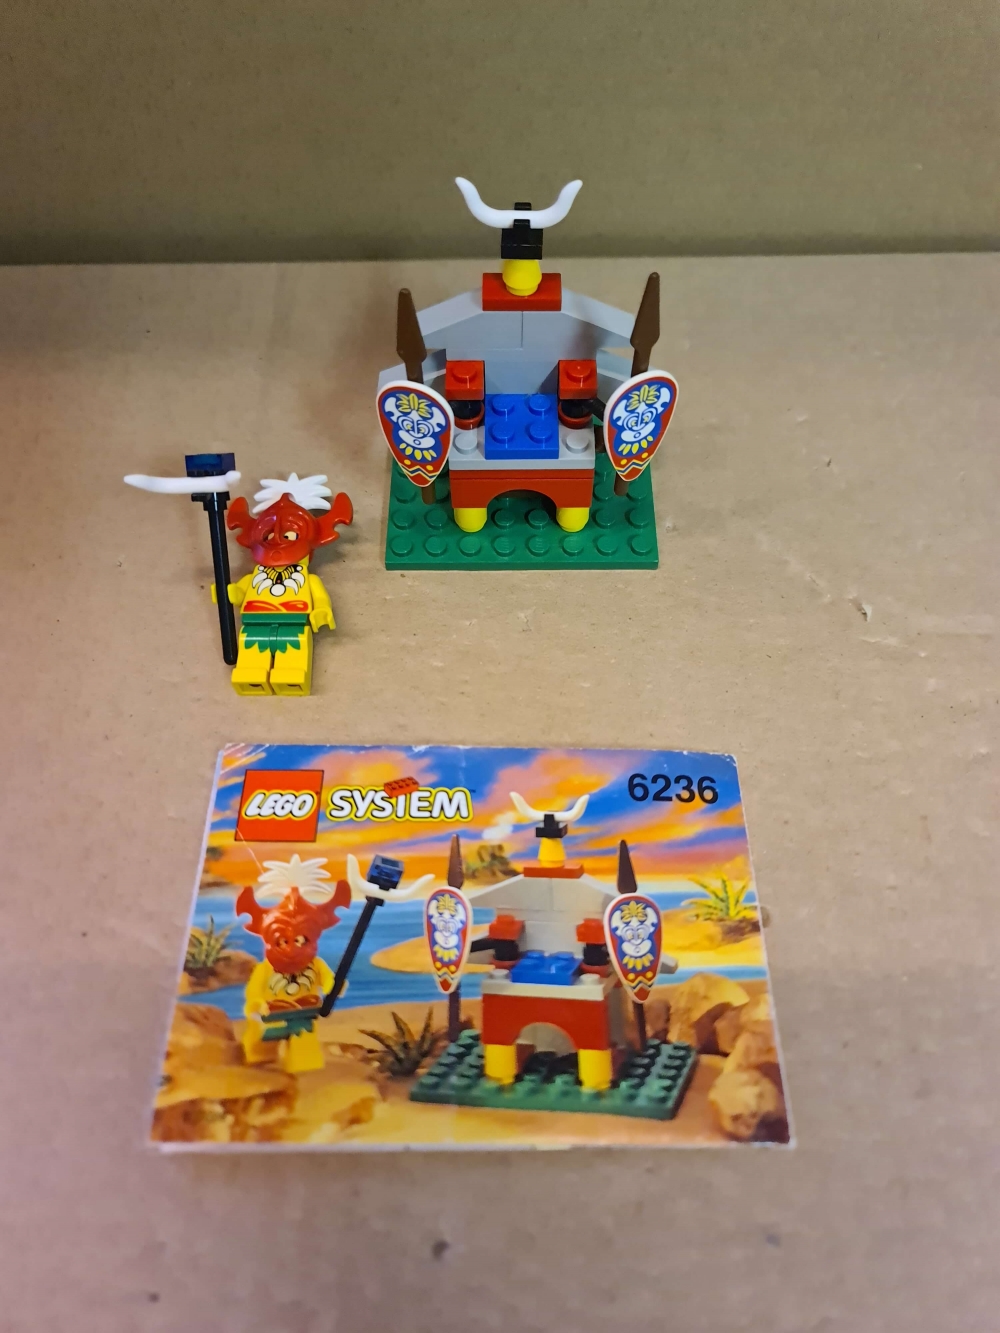 sett 6236 fra Lego Pirates : Pirates 1 : Islanders serien.
Meget pent sett.
Komplett med manual.